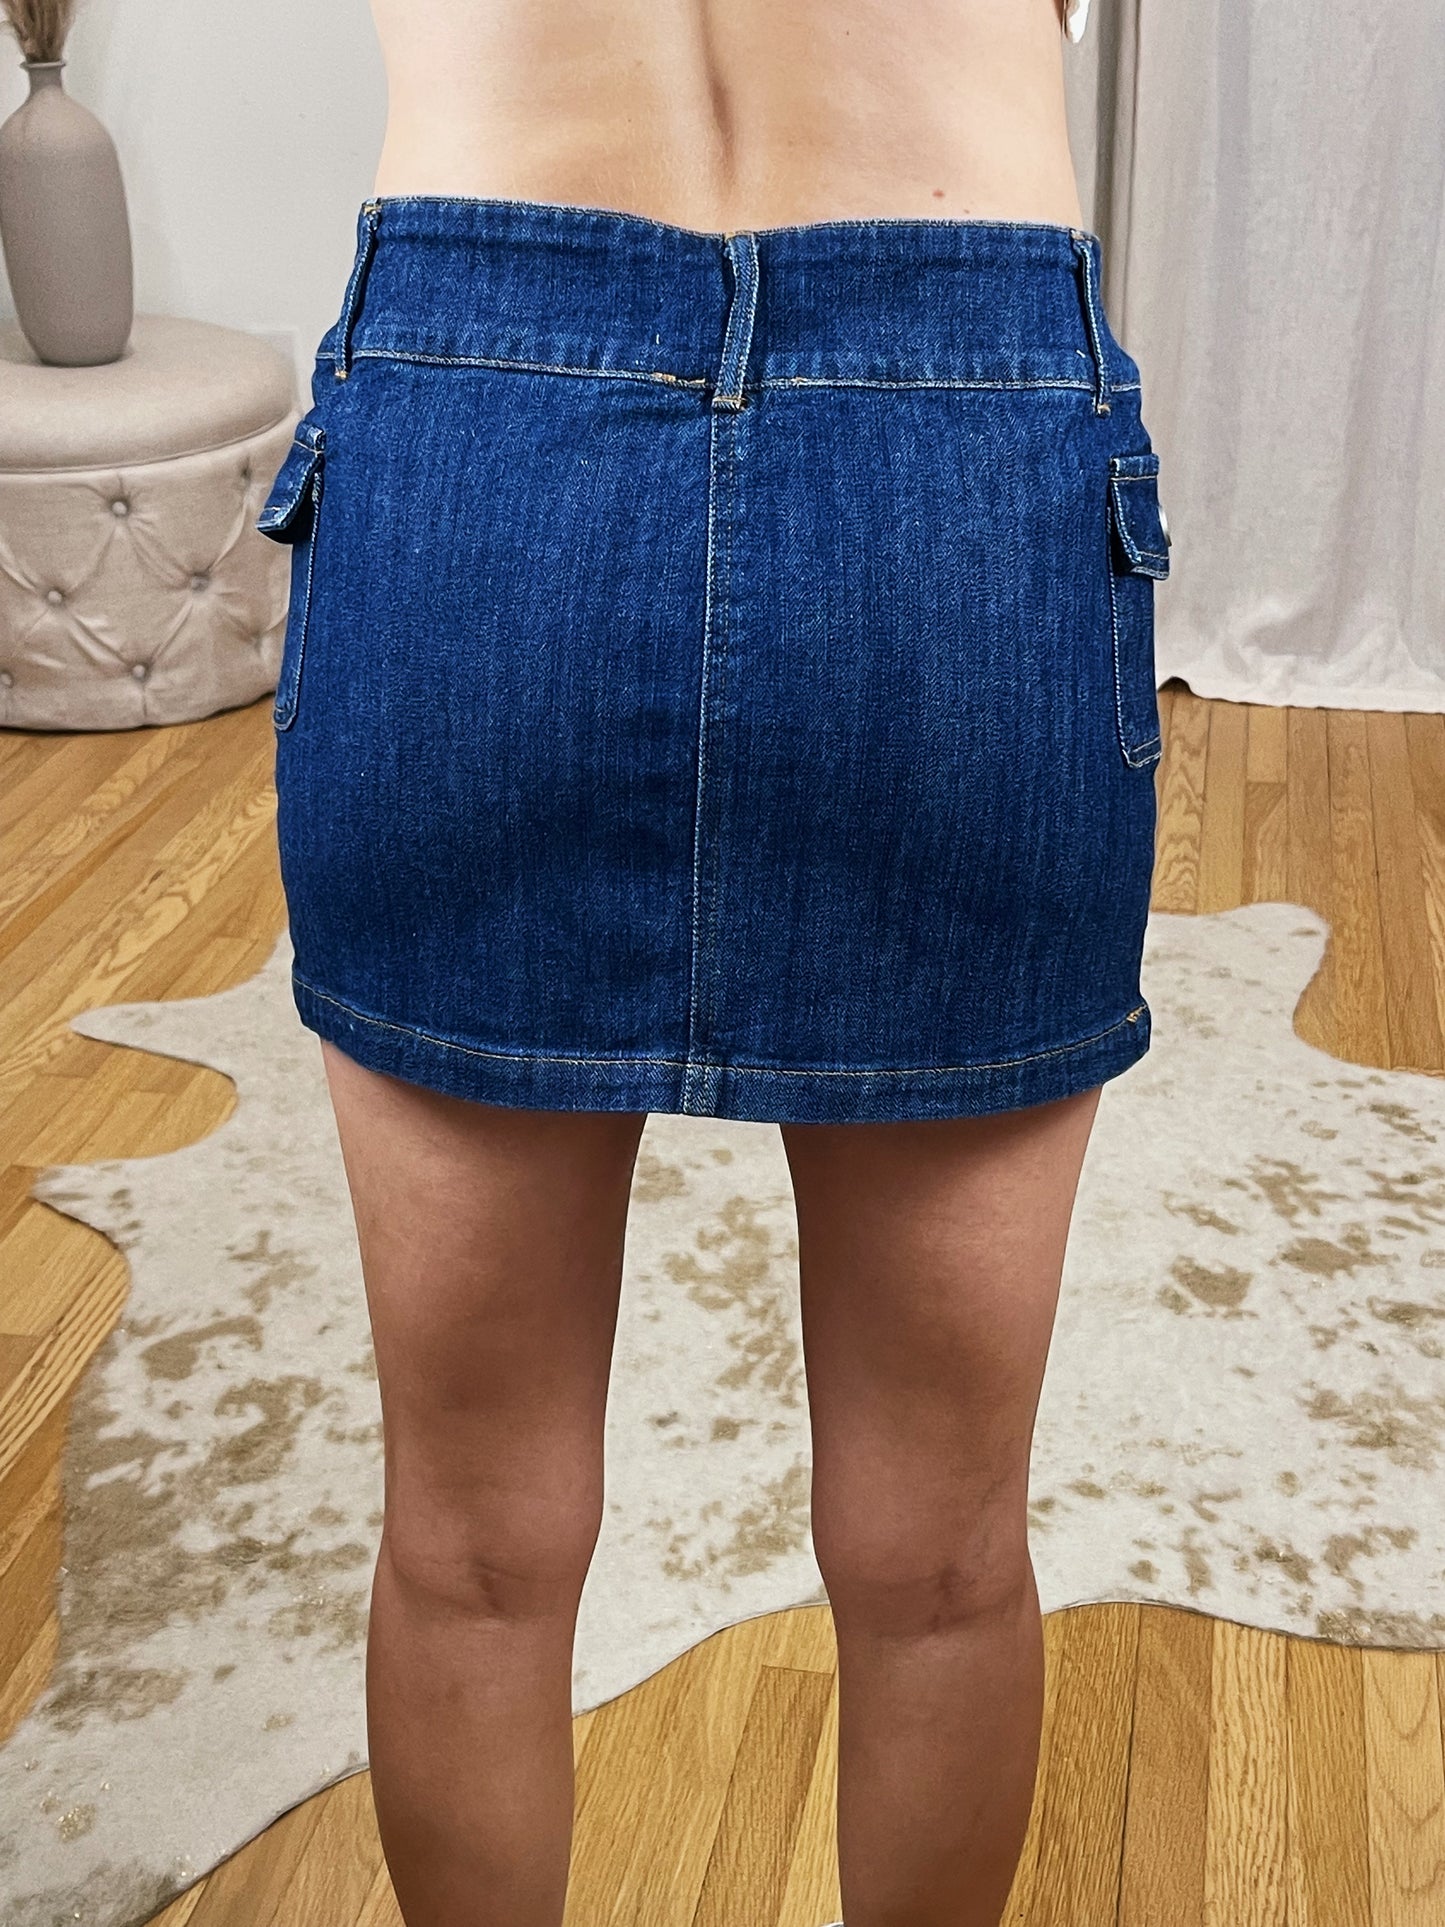 Thrifty Mini Skirt